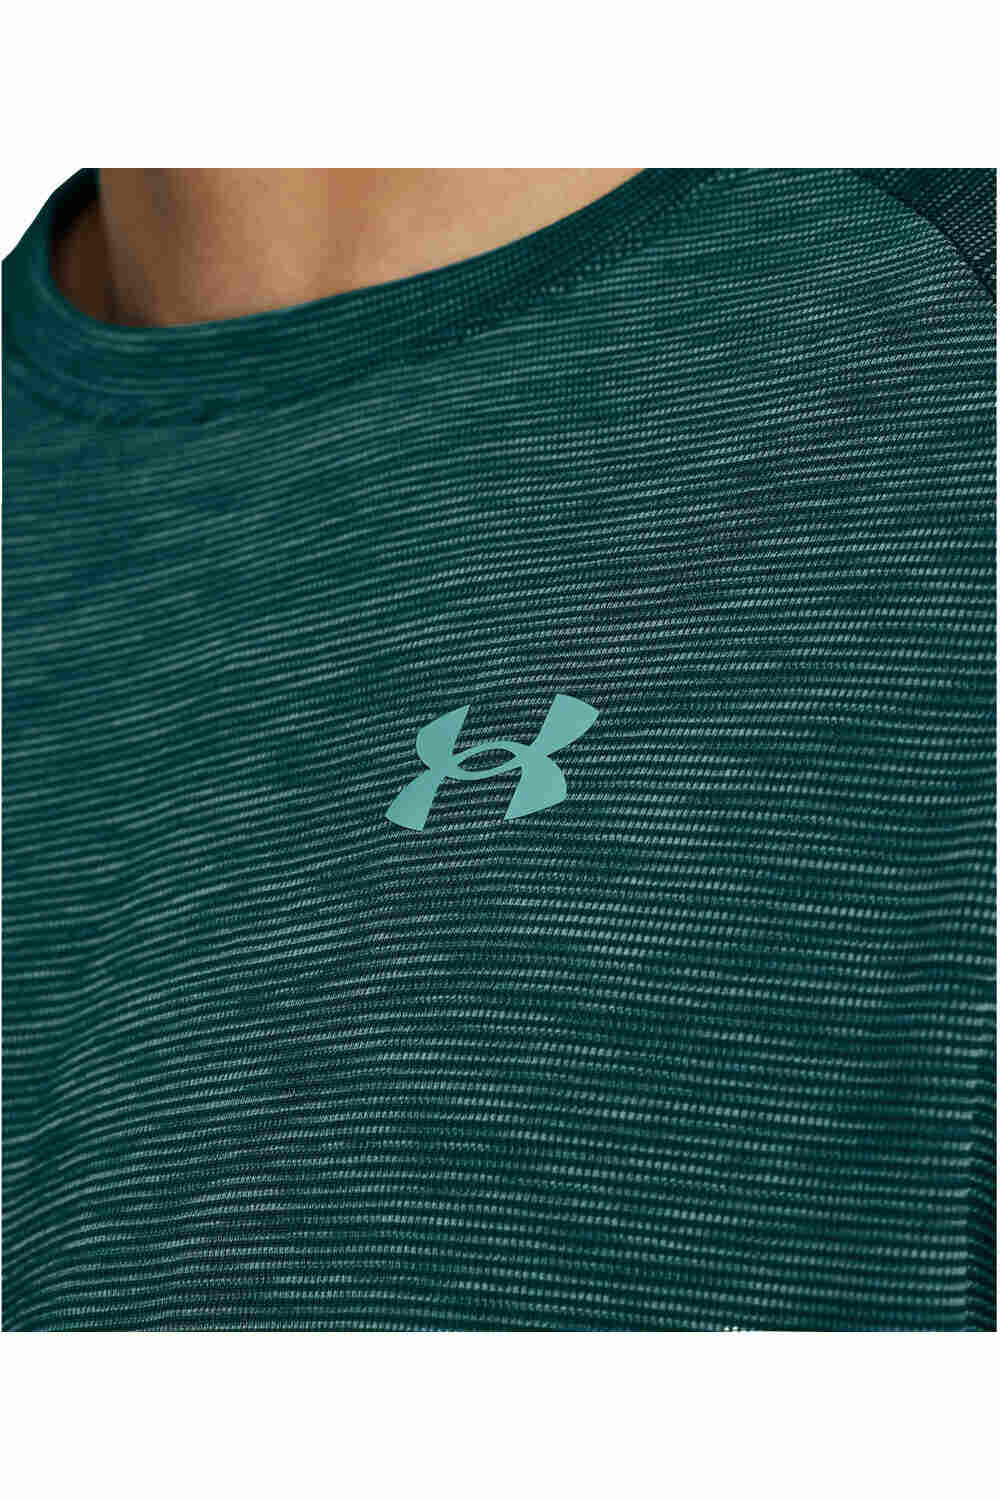 Under Armour camiseta fitness hombre UA Tech Textured SS vista detalle